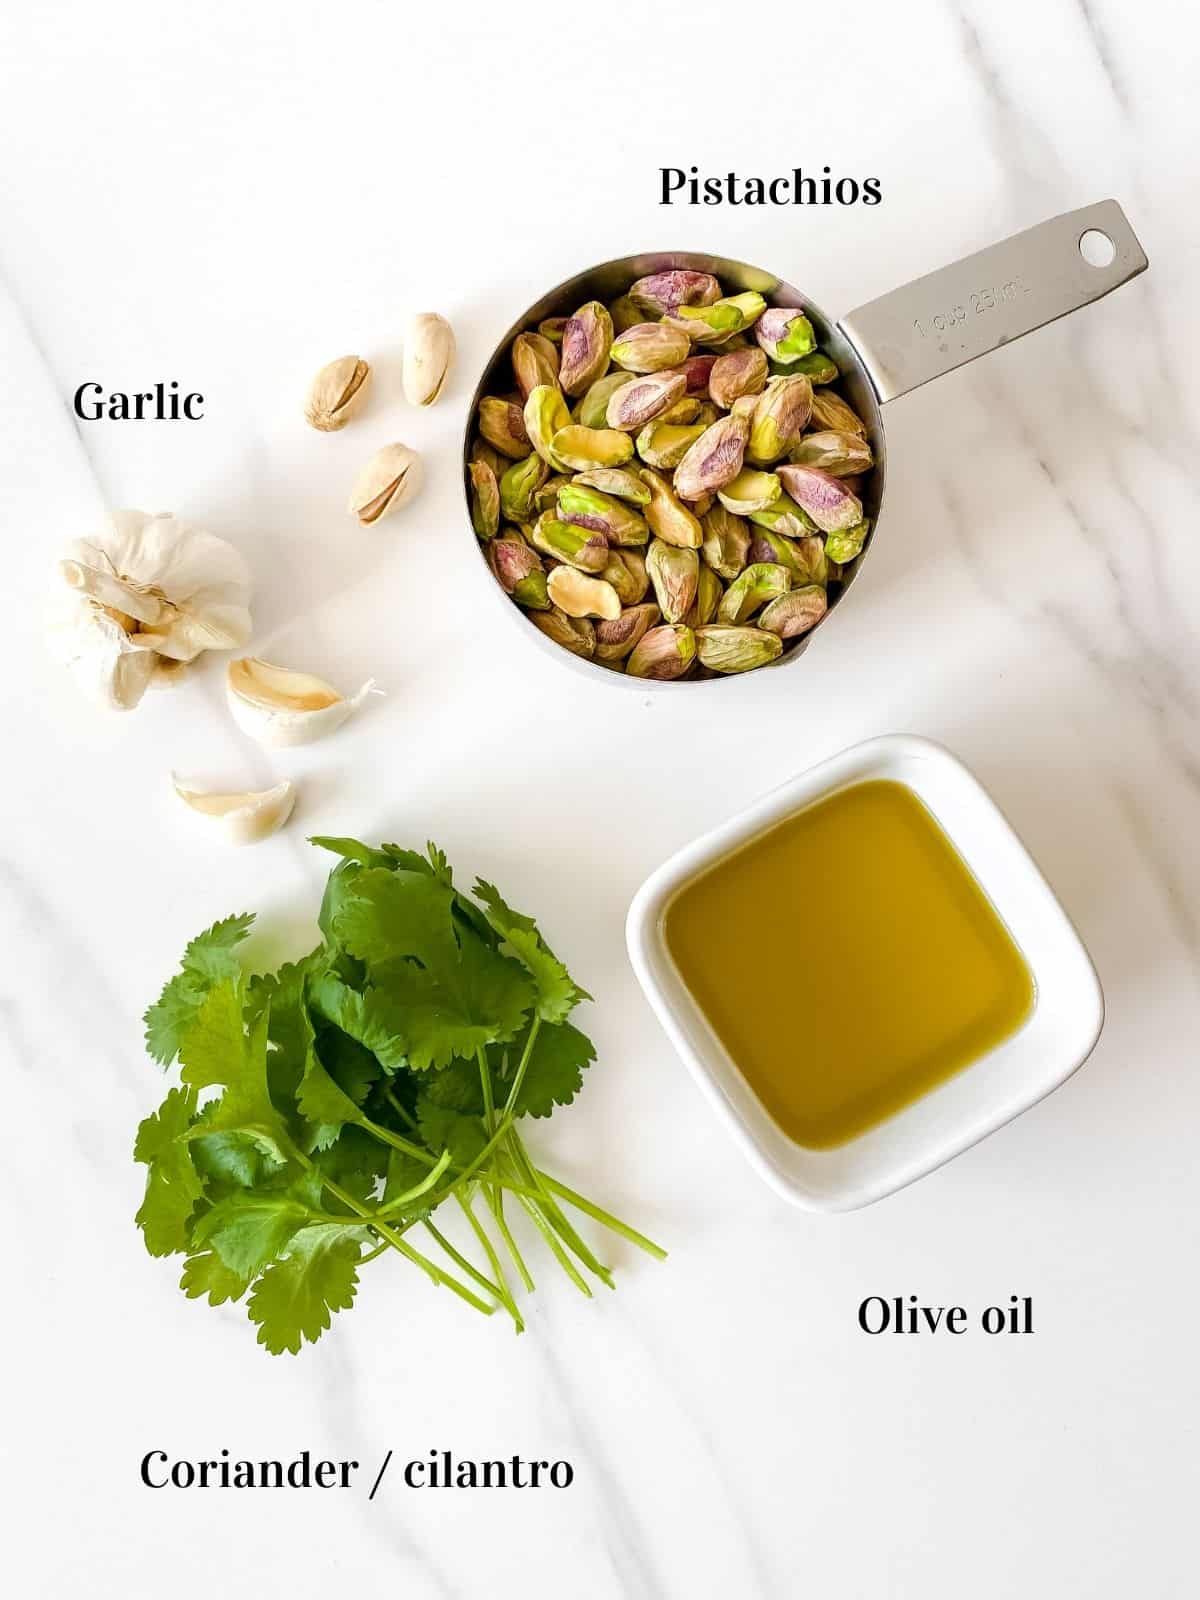 coriander, pistachios, olive oil and garlic.